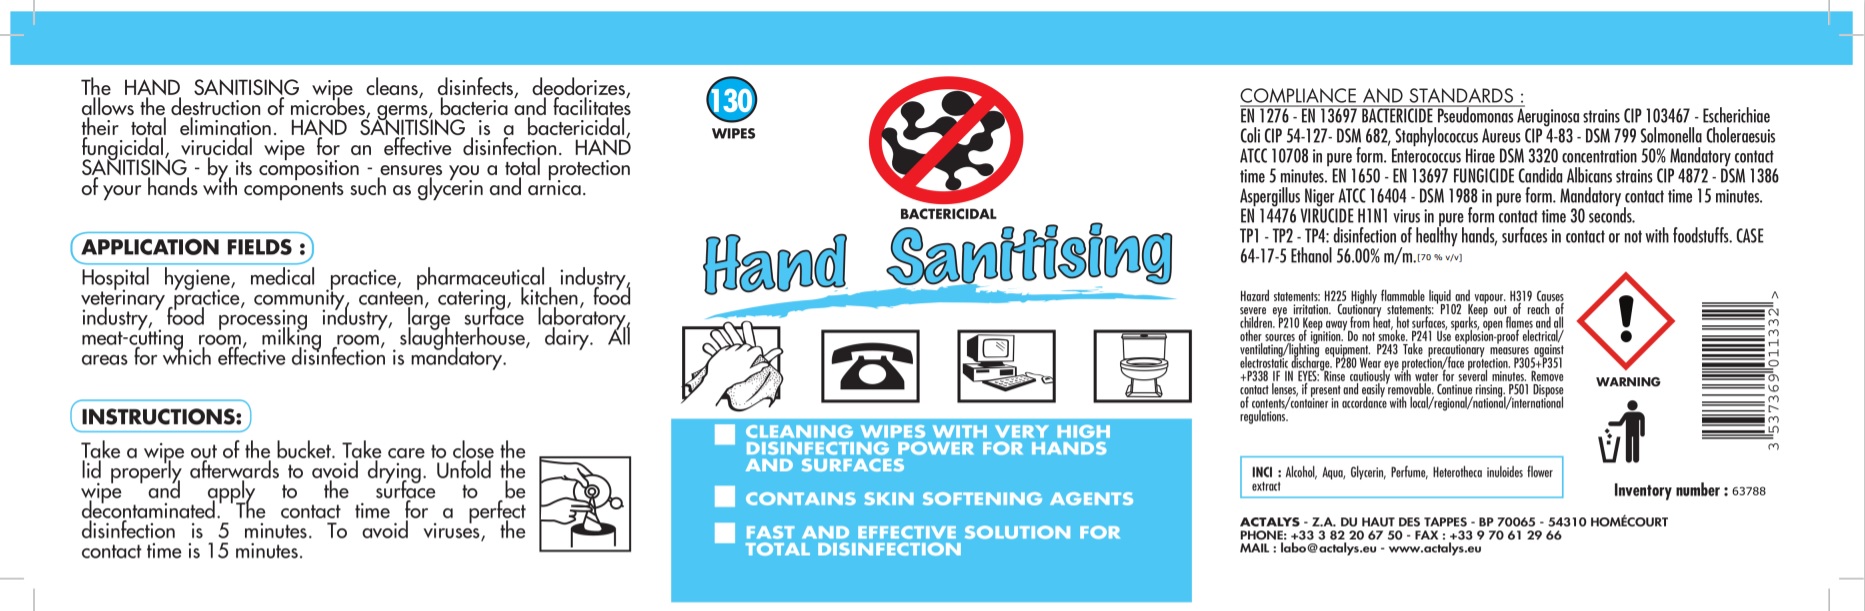 Hand Sanitizing Wipes Retail Label